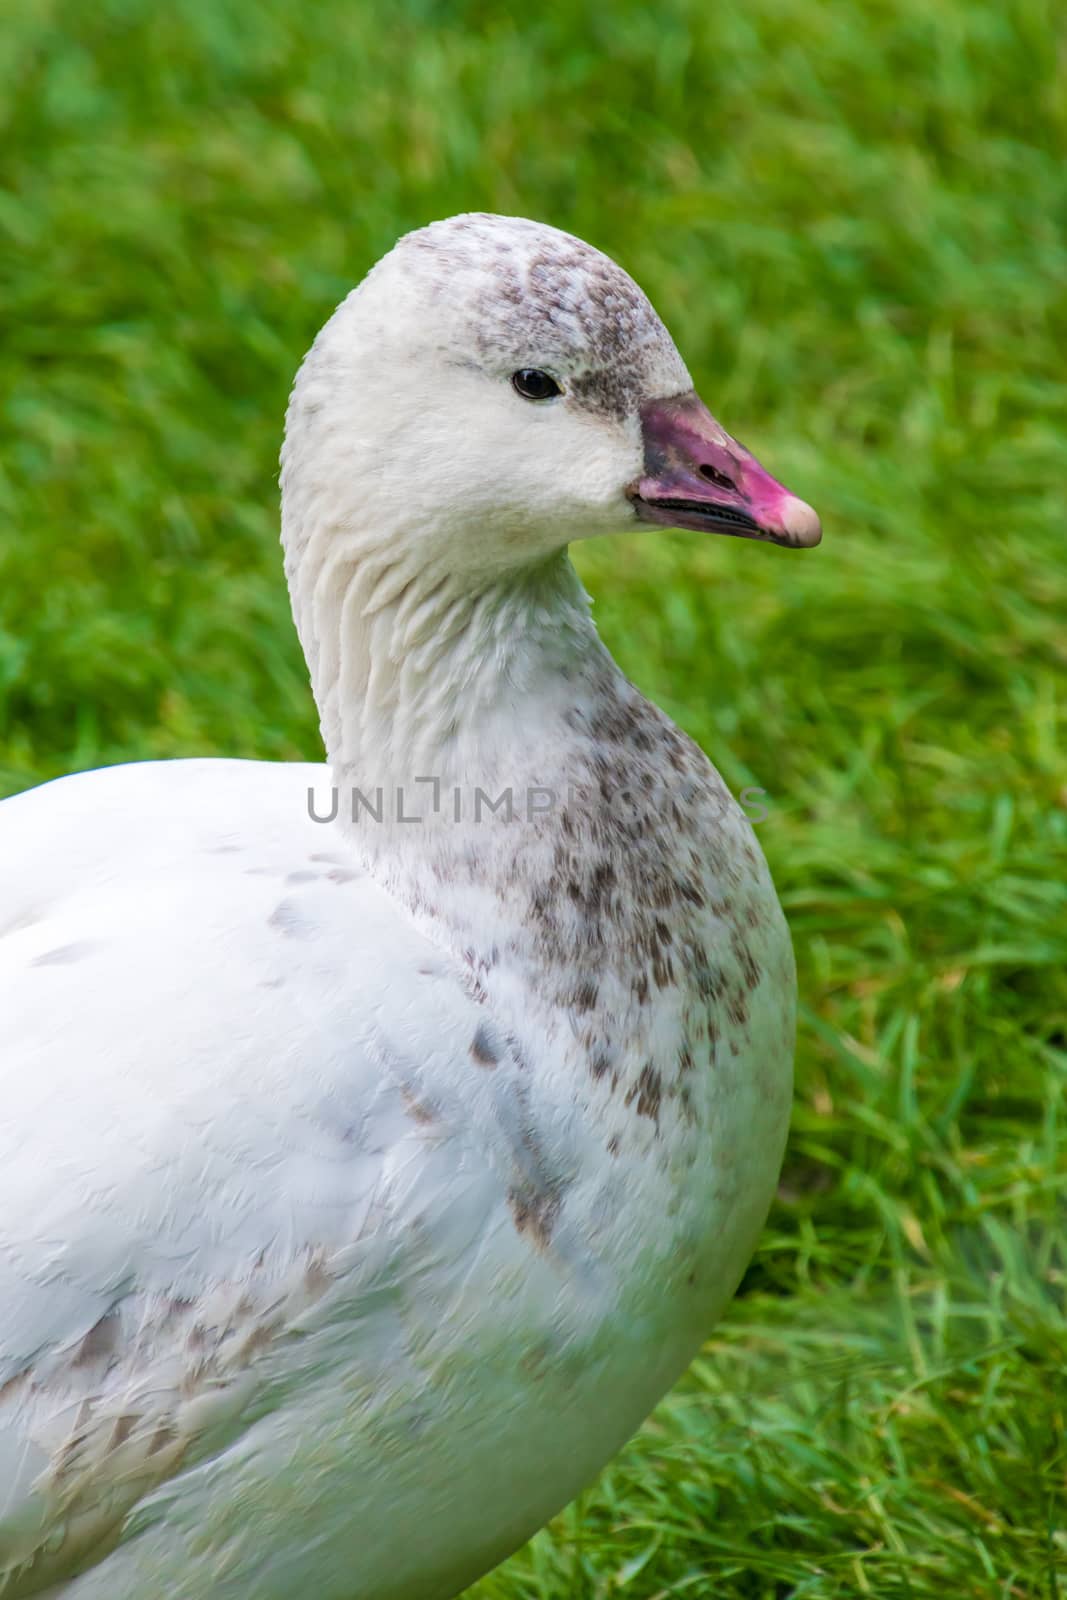 White wild duck with magenta colored beak by MXW_Stock